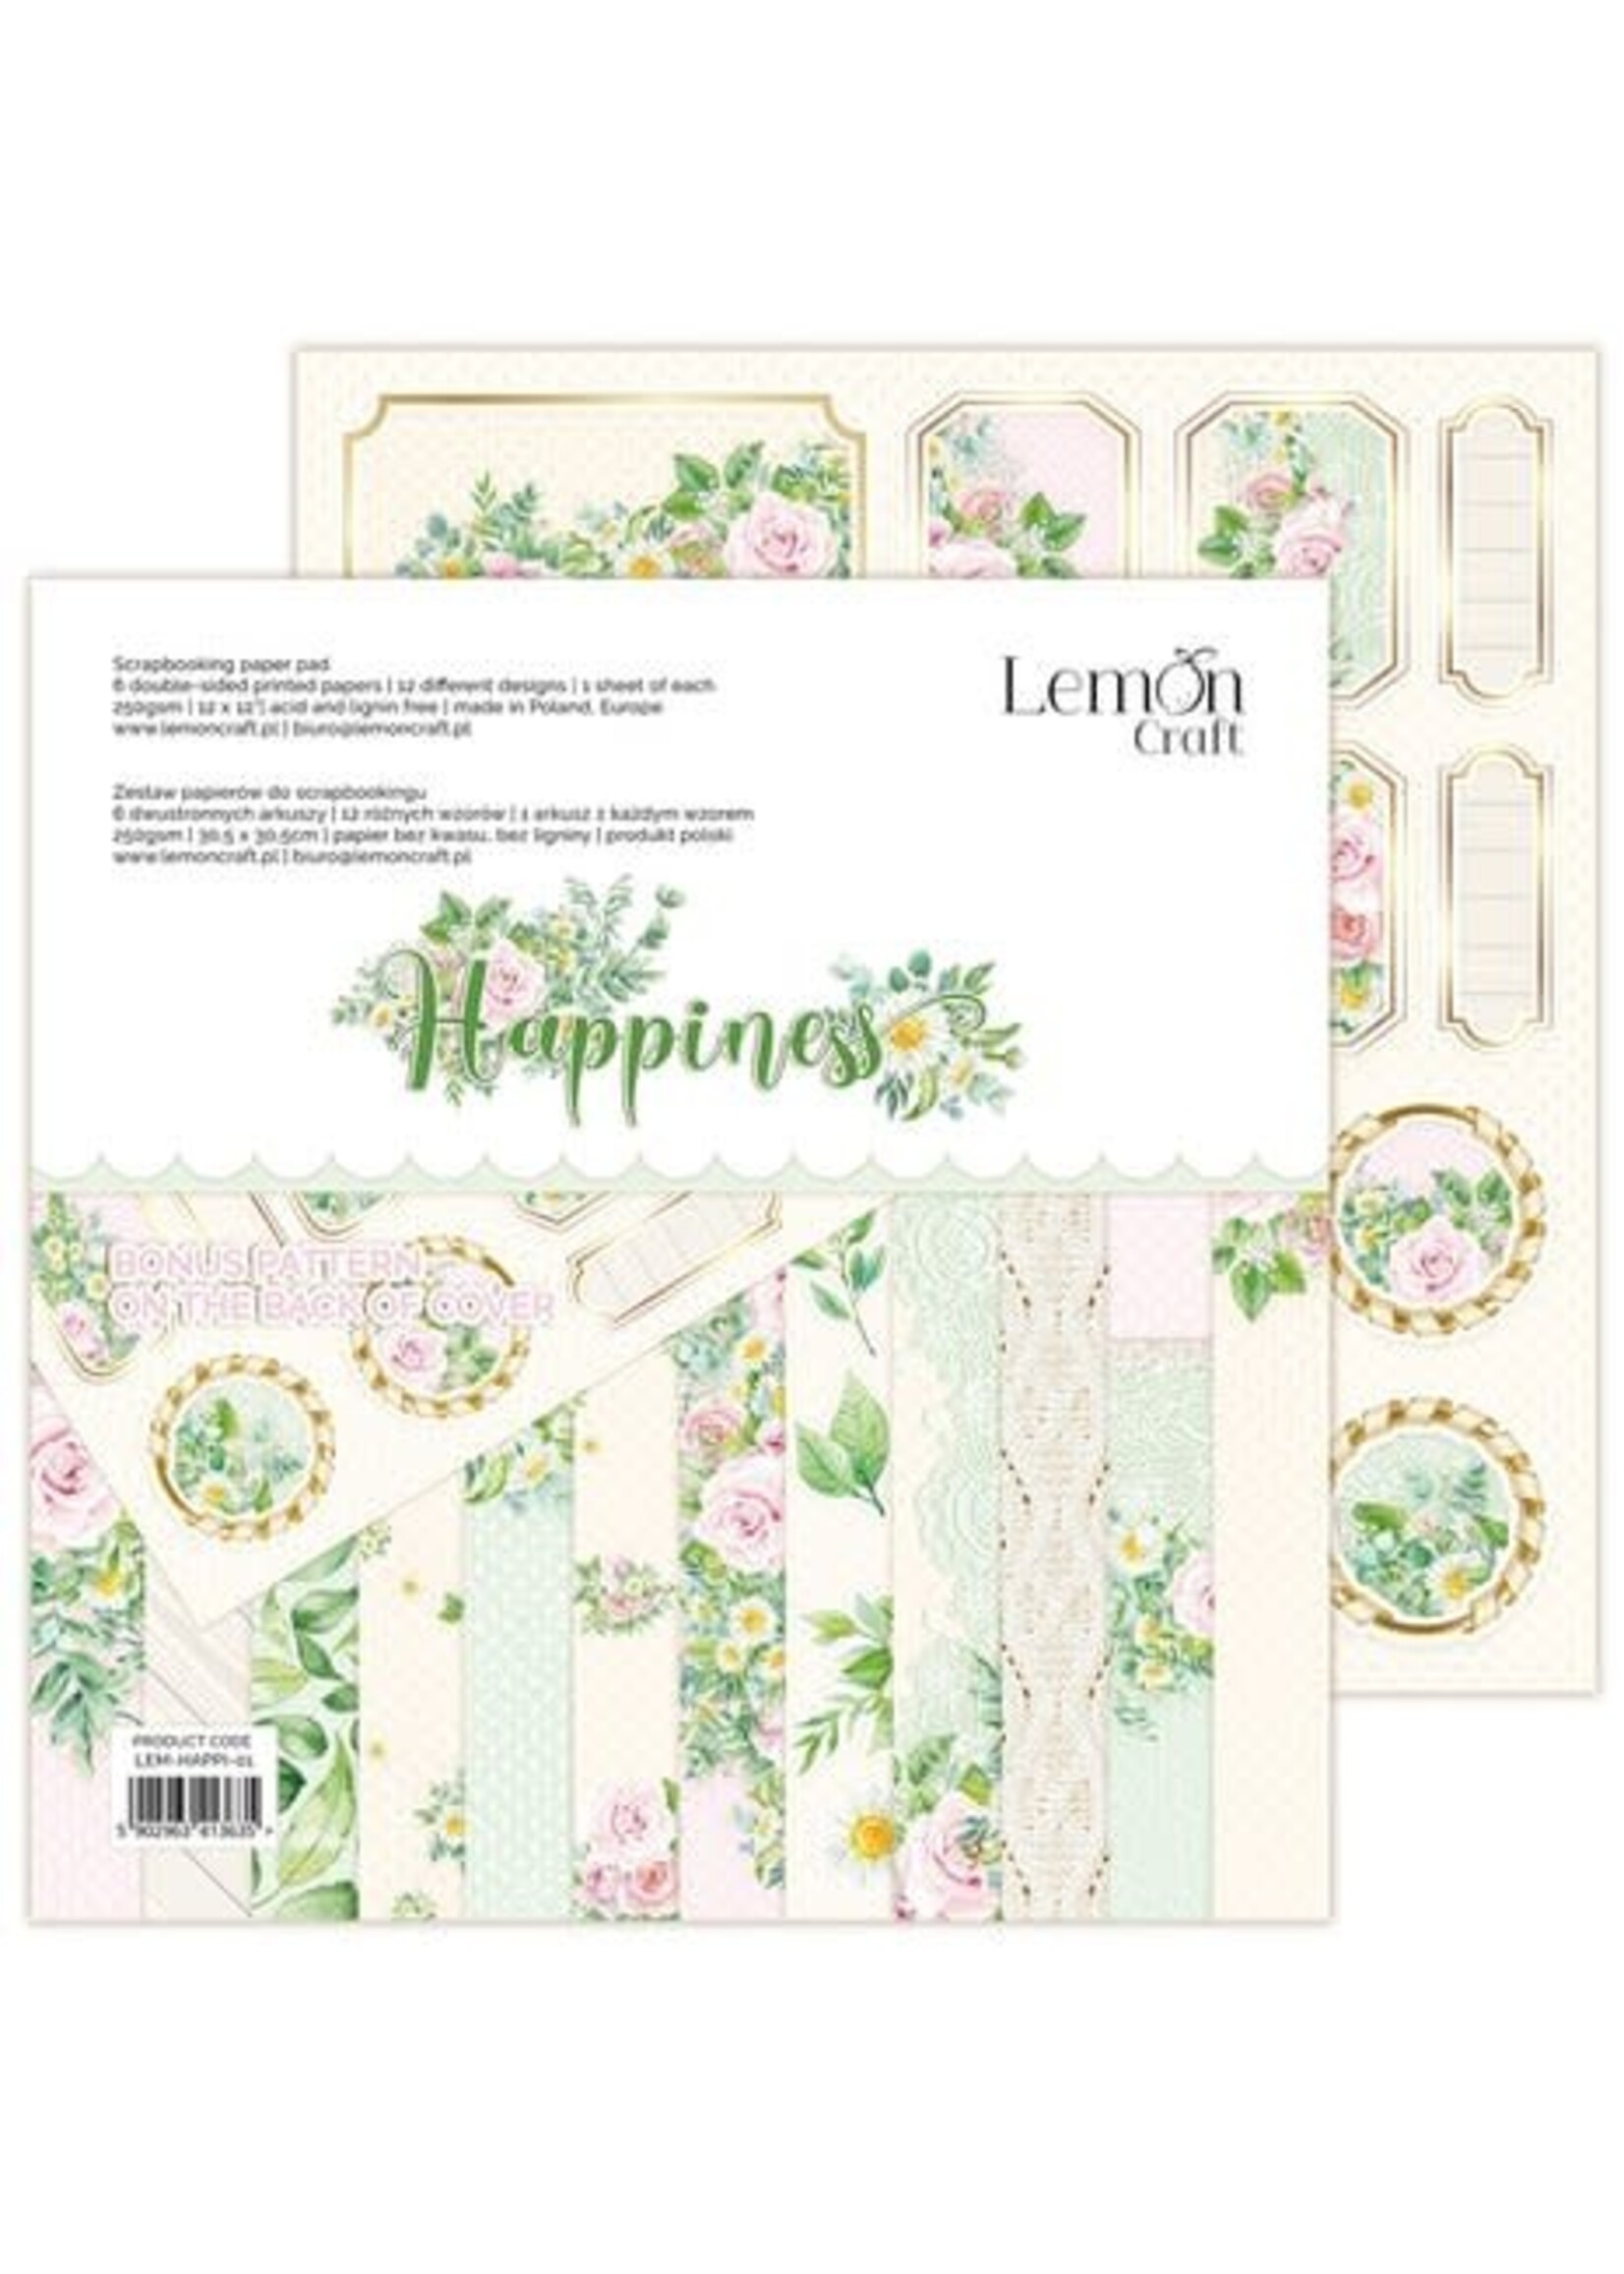 Lemon Craft Happiness 12x12 Inch Paper Pad (LEM-HAPPI-01)